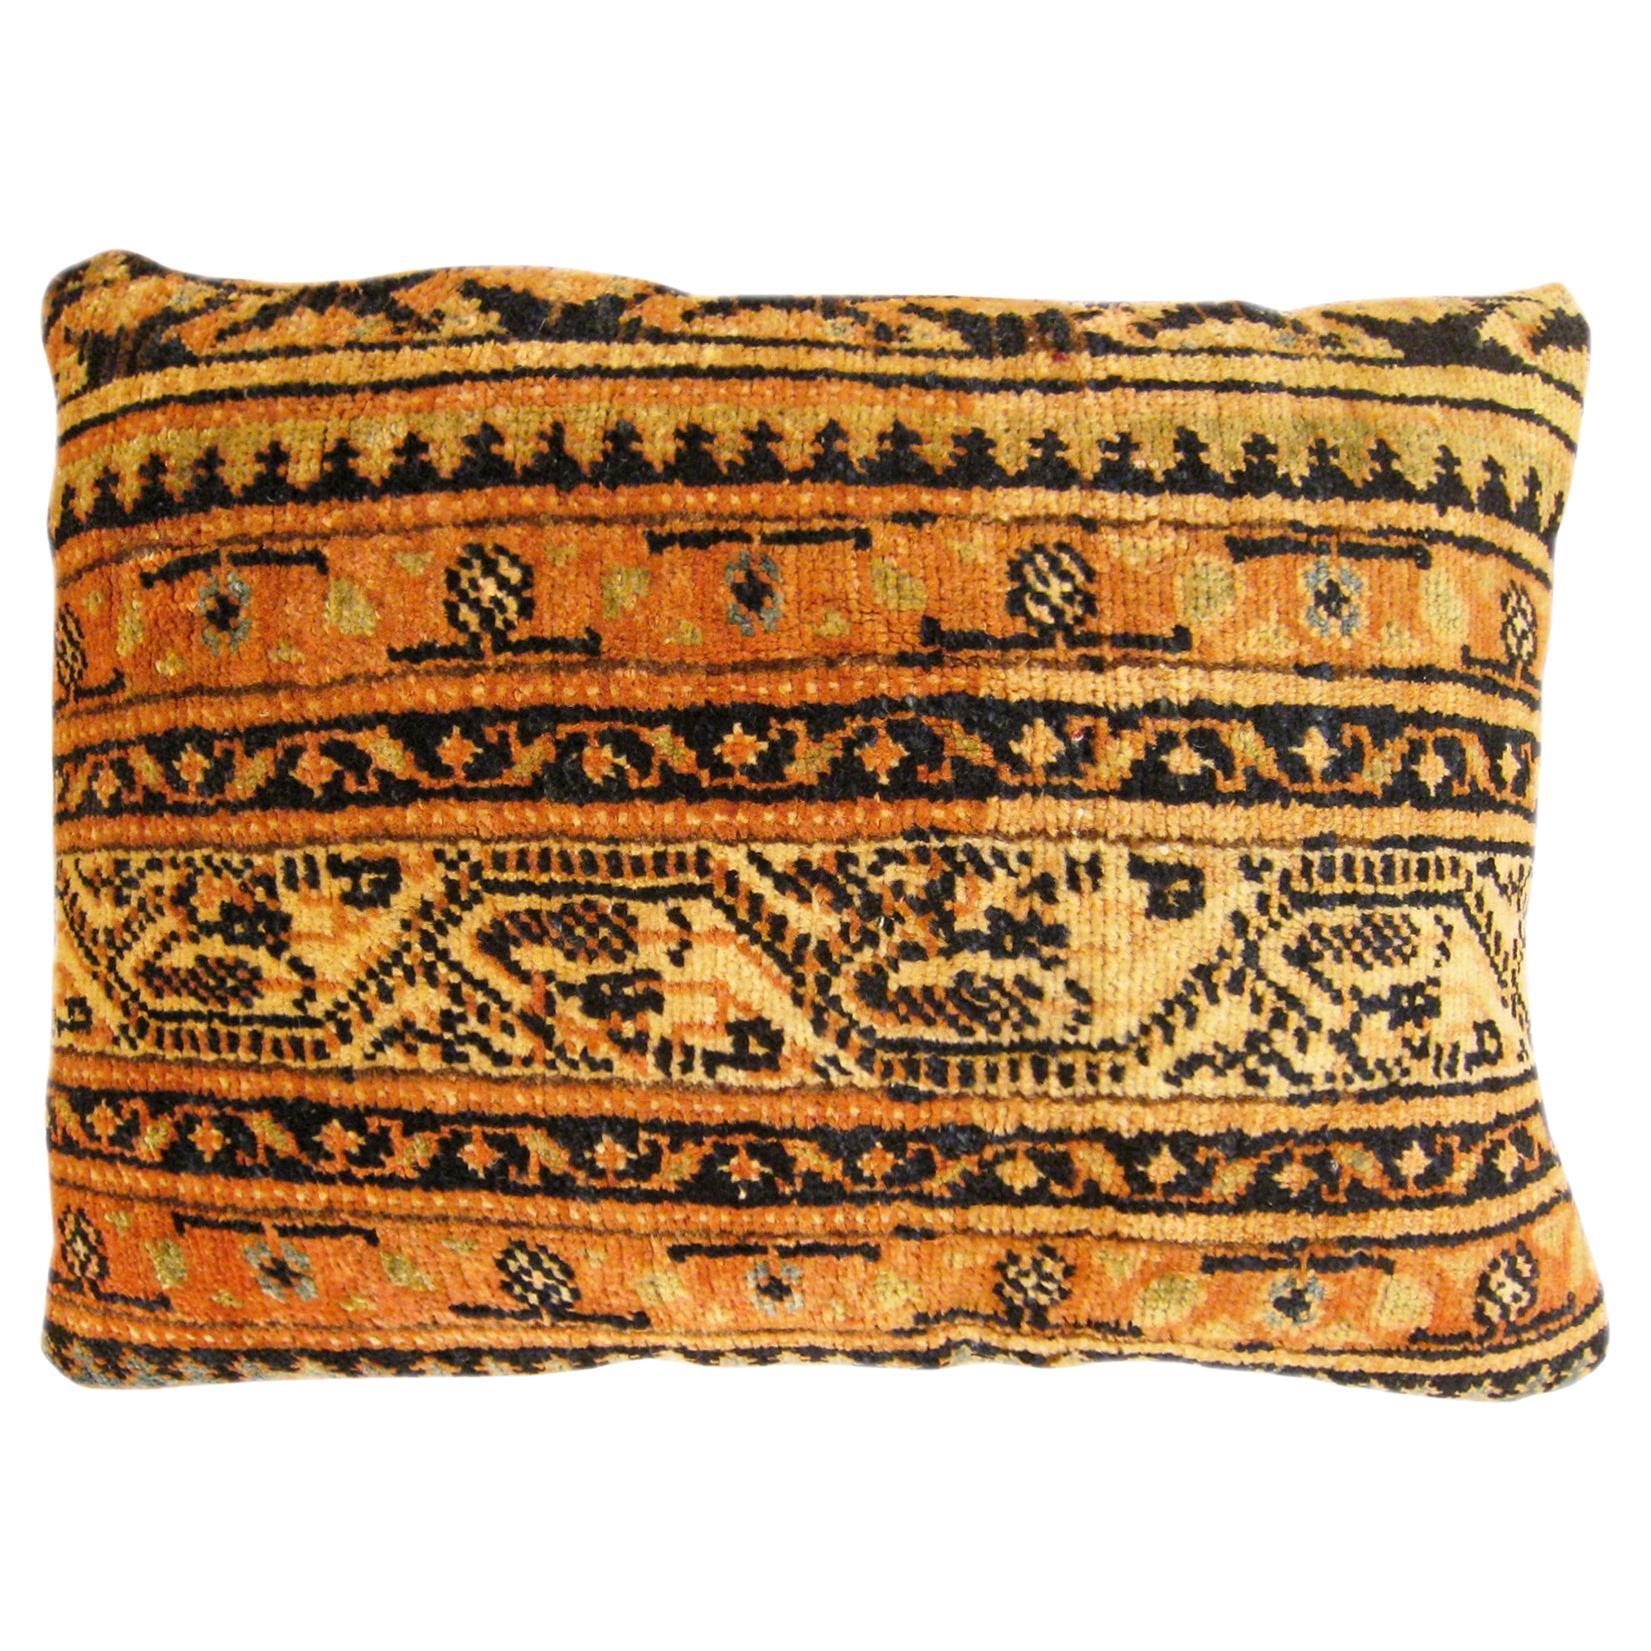 Decorative Antique Persian Saraband Carpet Pillow with a Paisley Design Allover